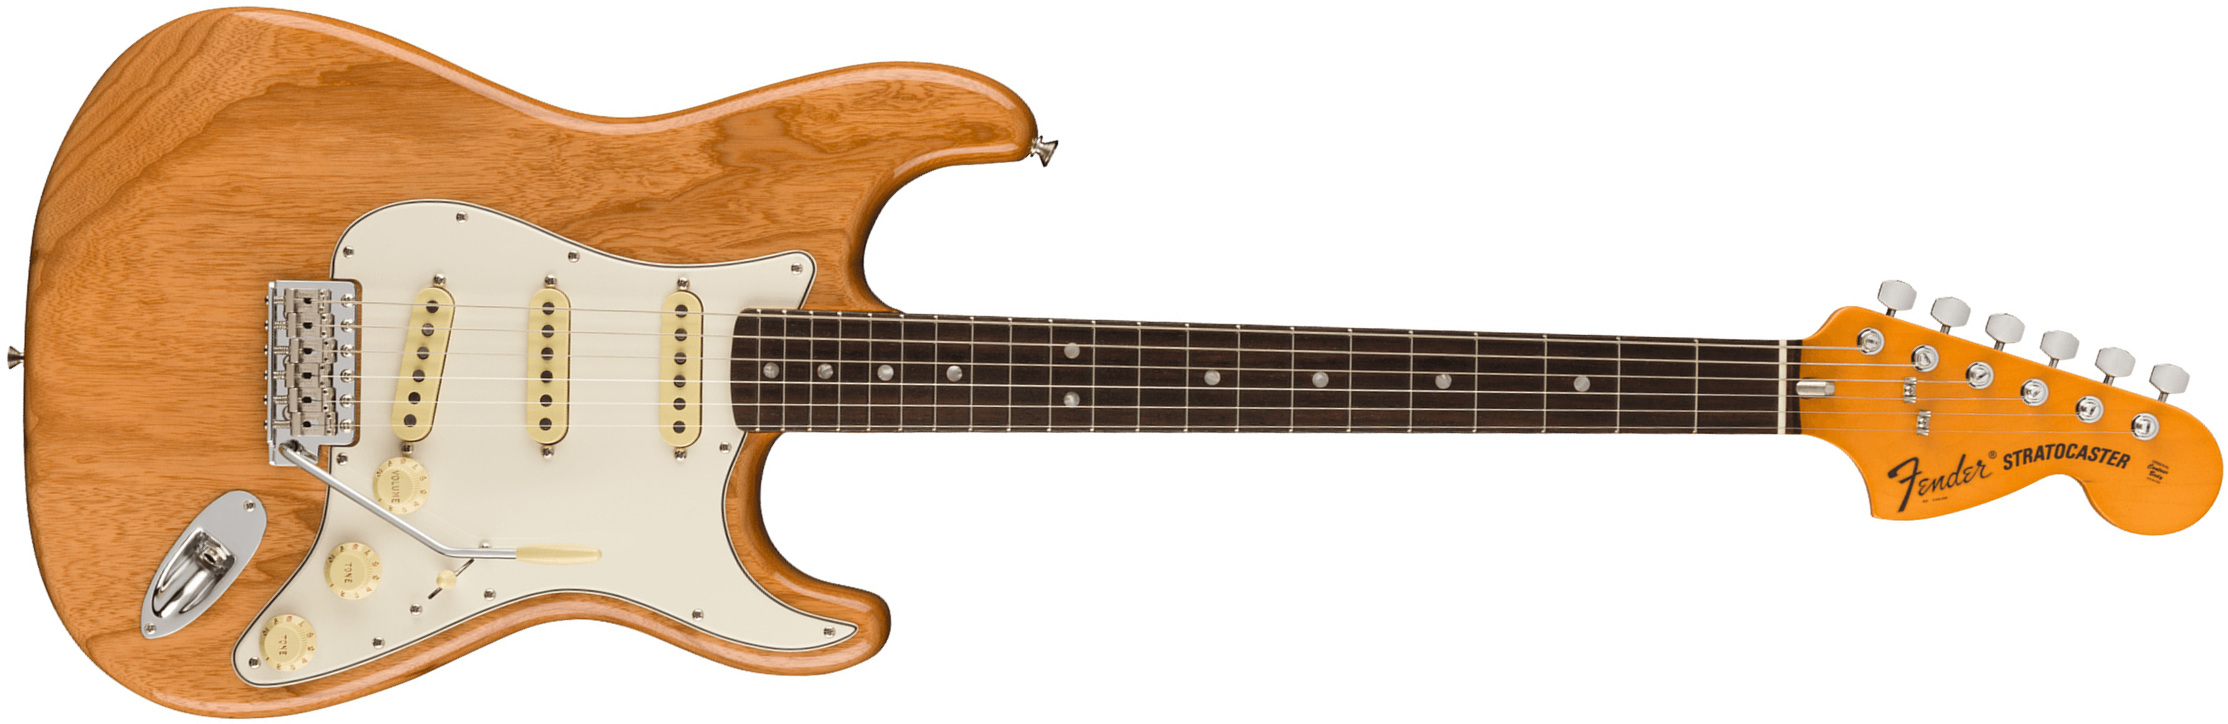 Fender Strat 1973 American Vintage Ii Usa 3s Trem Rw - Aged Natural - Str shape electric guitar - Main picture